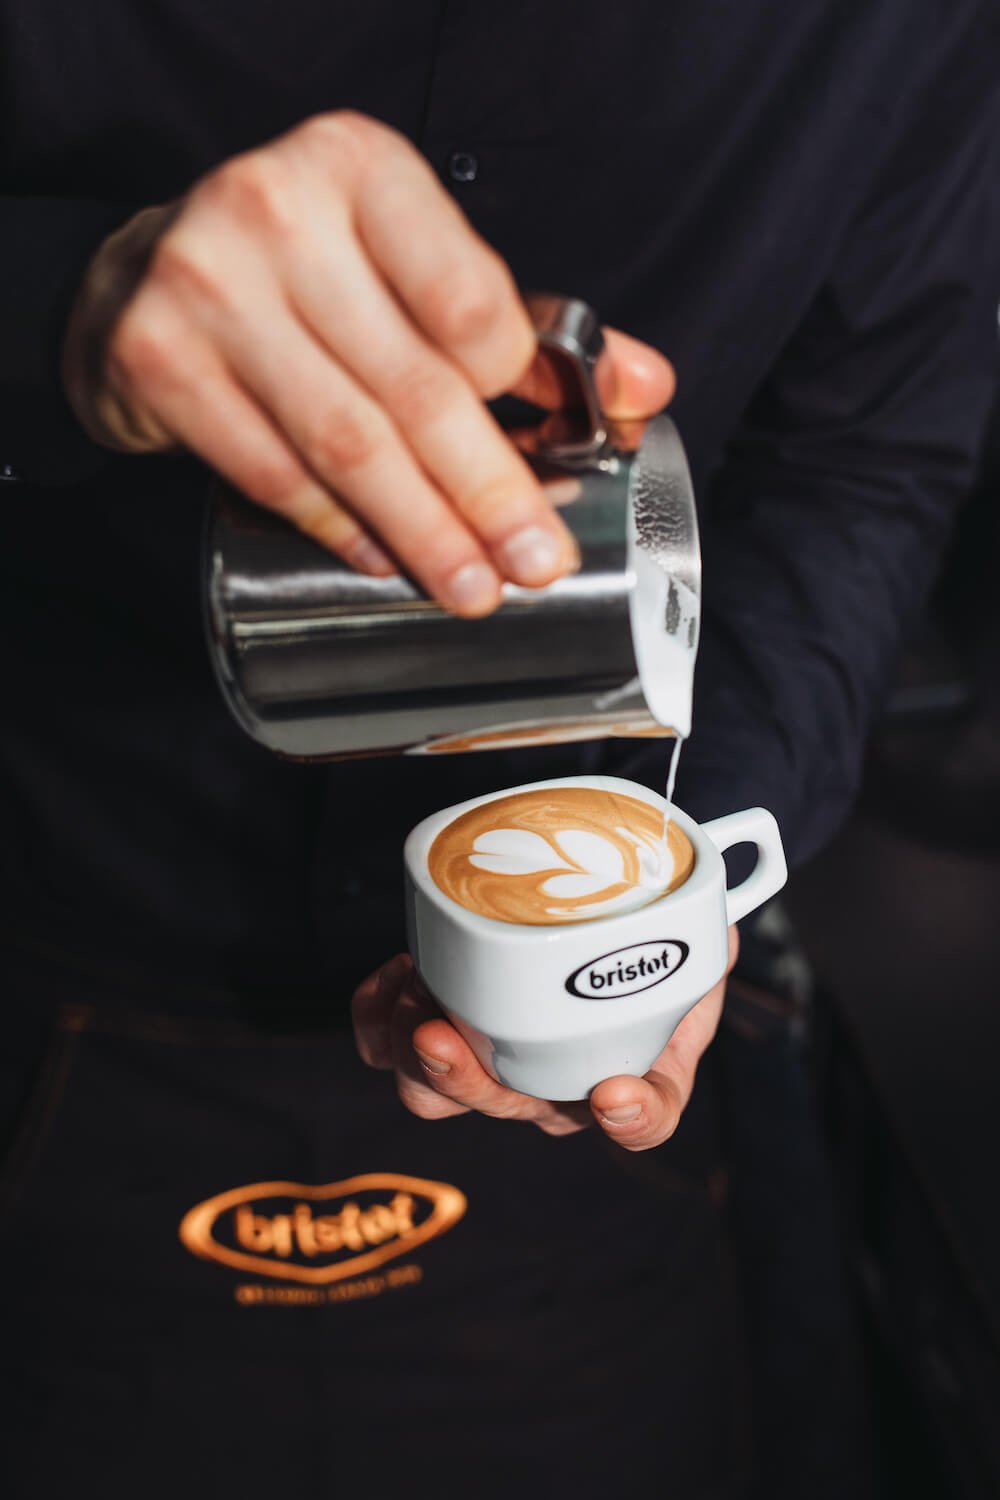 Bristot Kaffee als Cappuccino mit Latte Art in Tasse